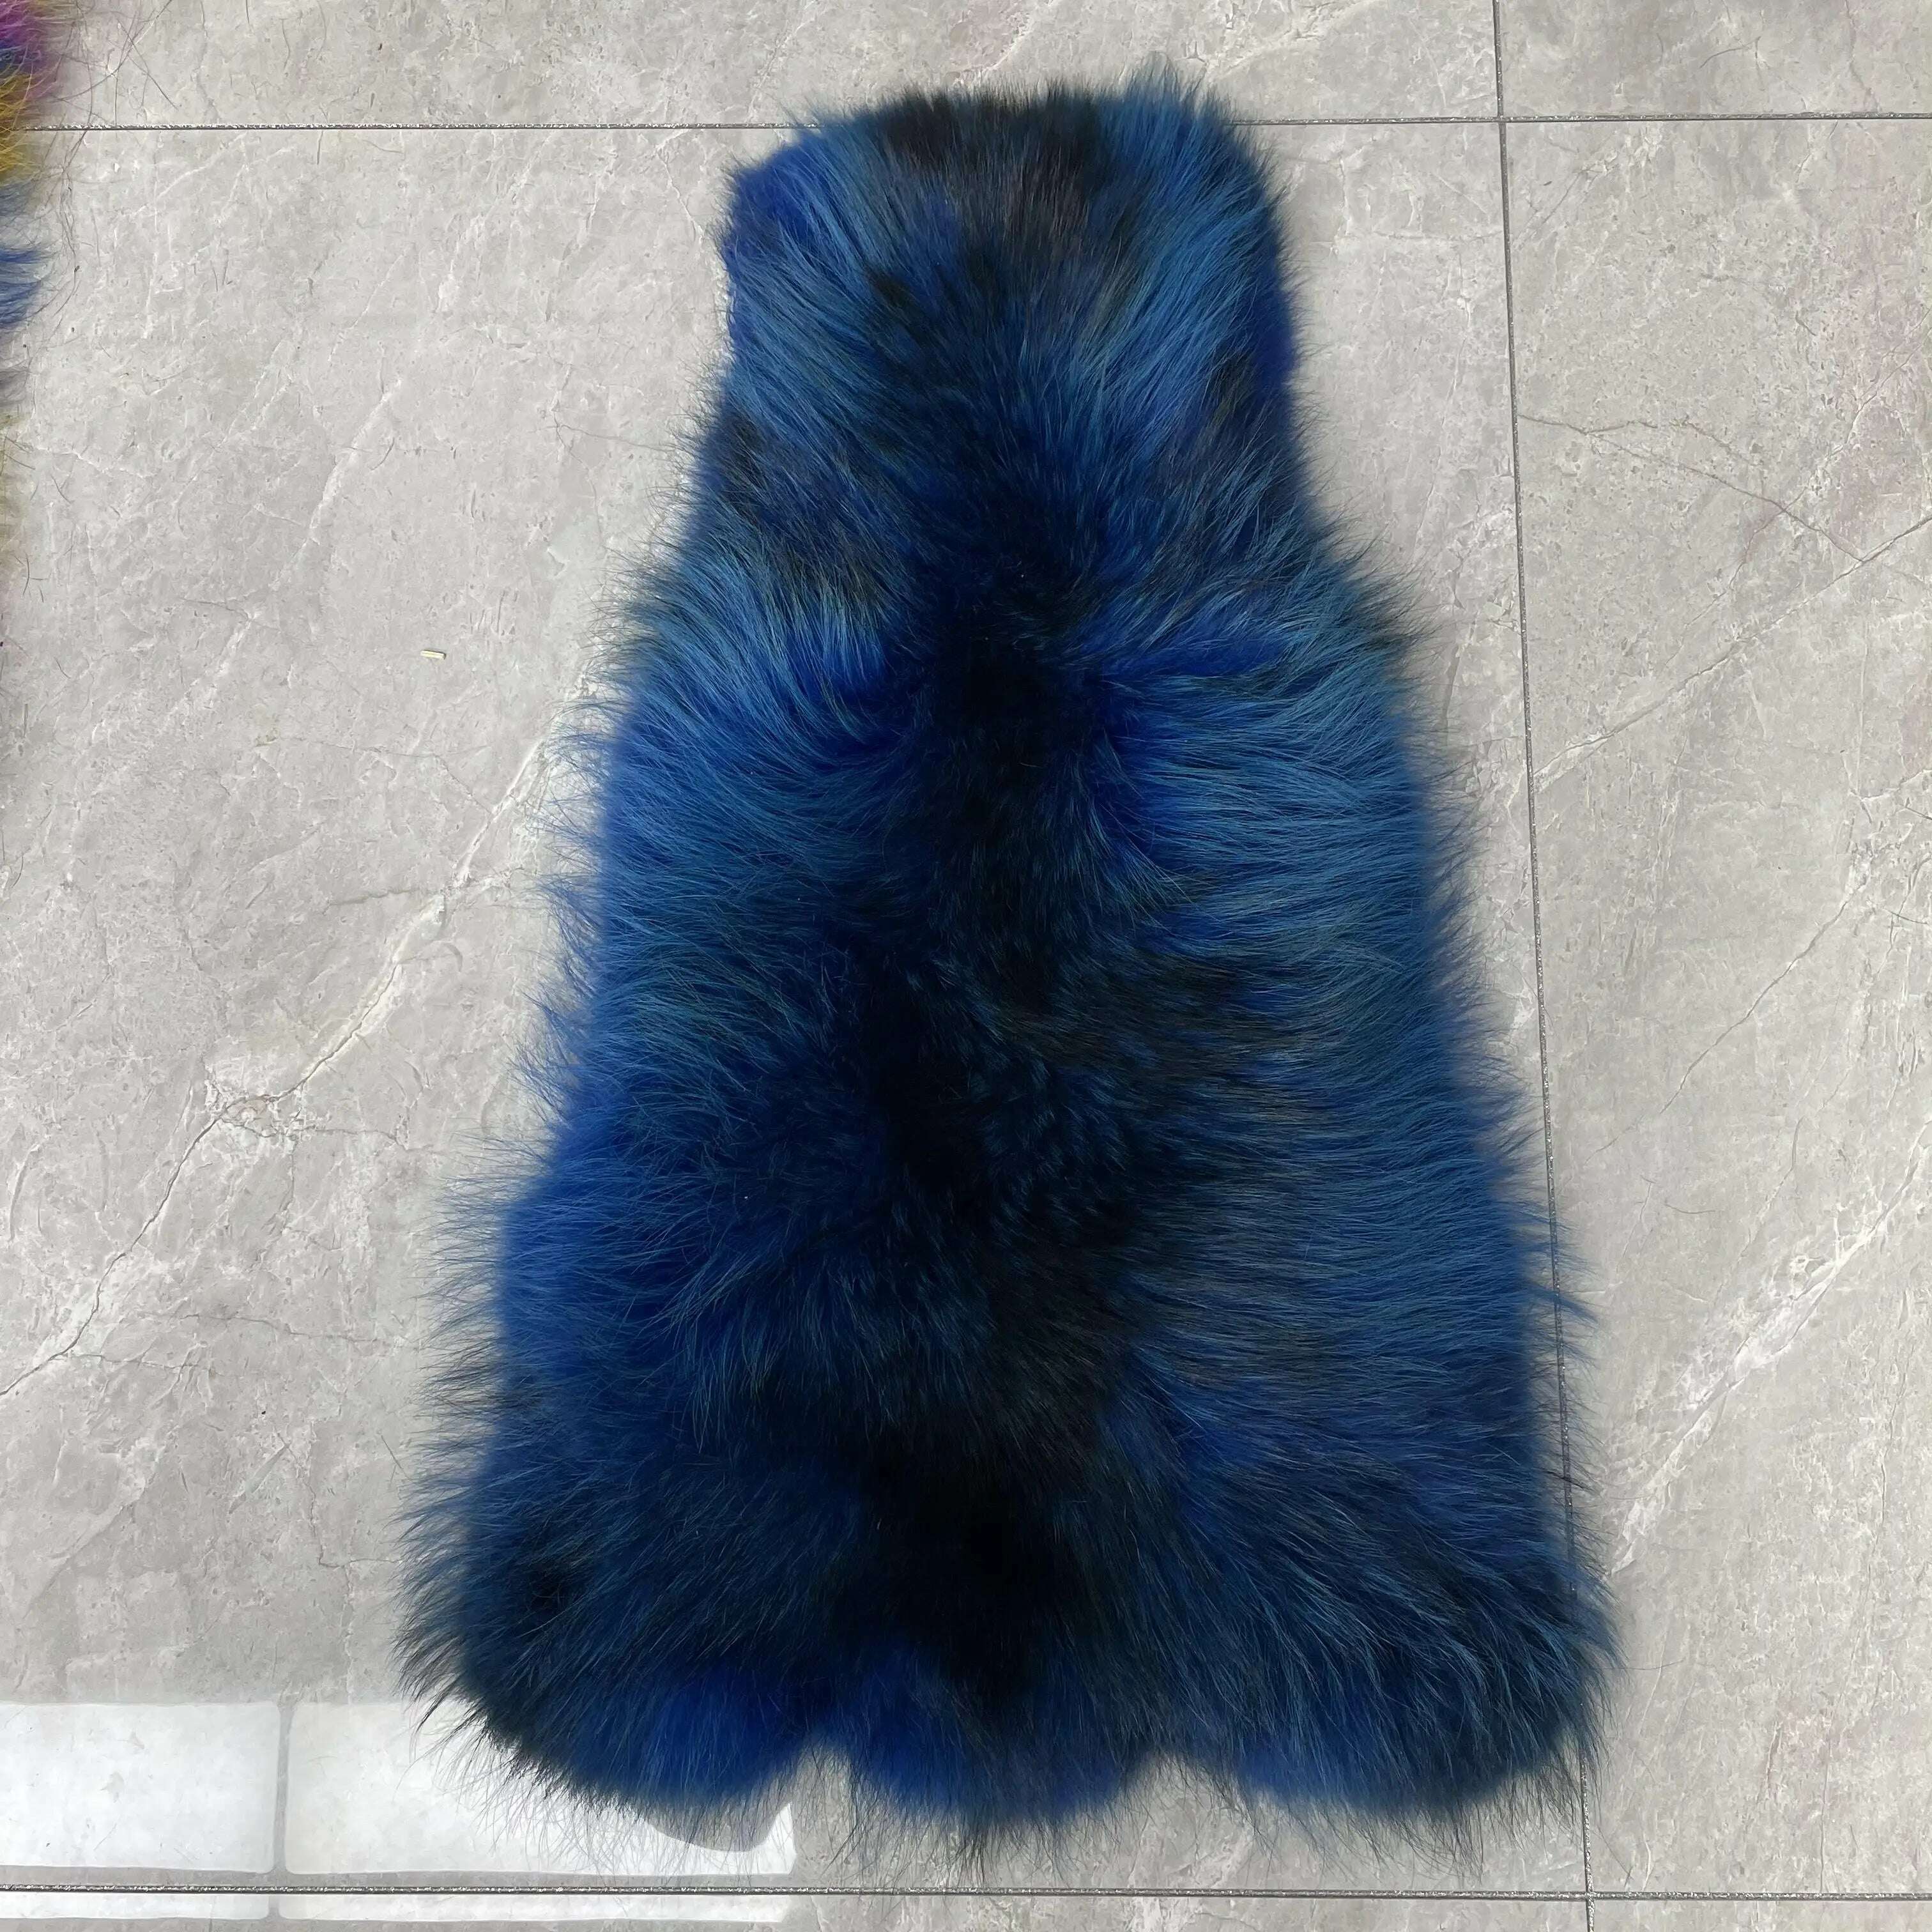 KIMLUD, Wholeskin Men Golden Fox Fur Long Coats Shawl Collar Winter Overcoats Genuine Natural Fox Furs Jacket, Deep Blue / XS(88cm), KIMLUD Womens Clothes